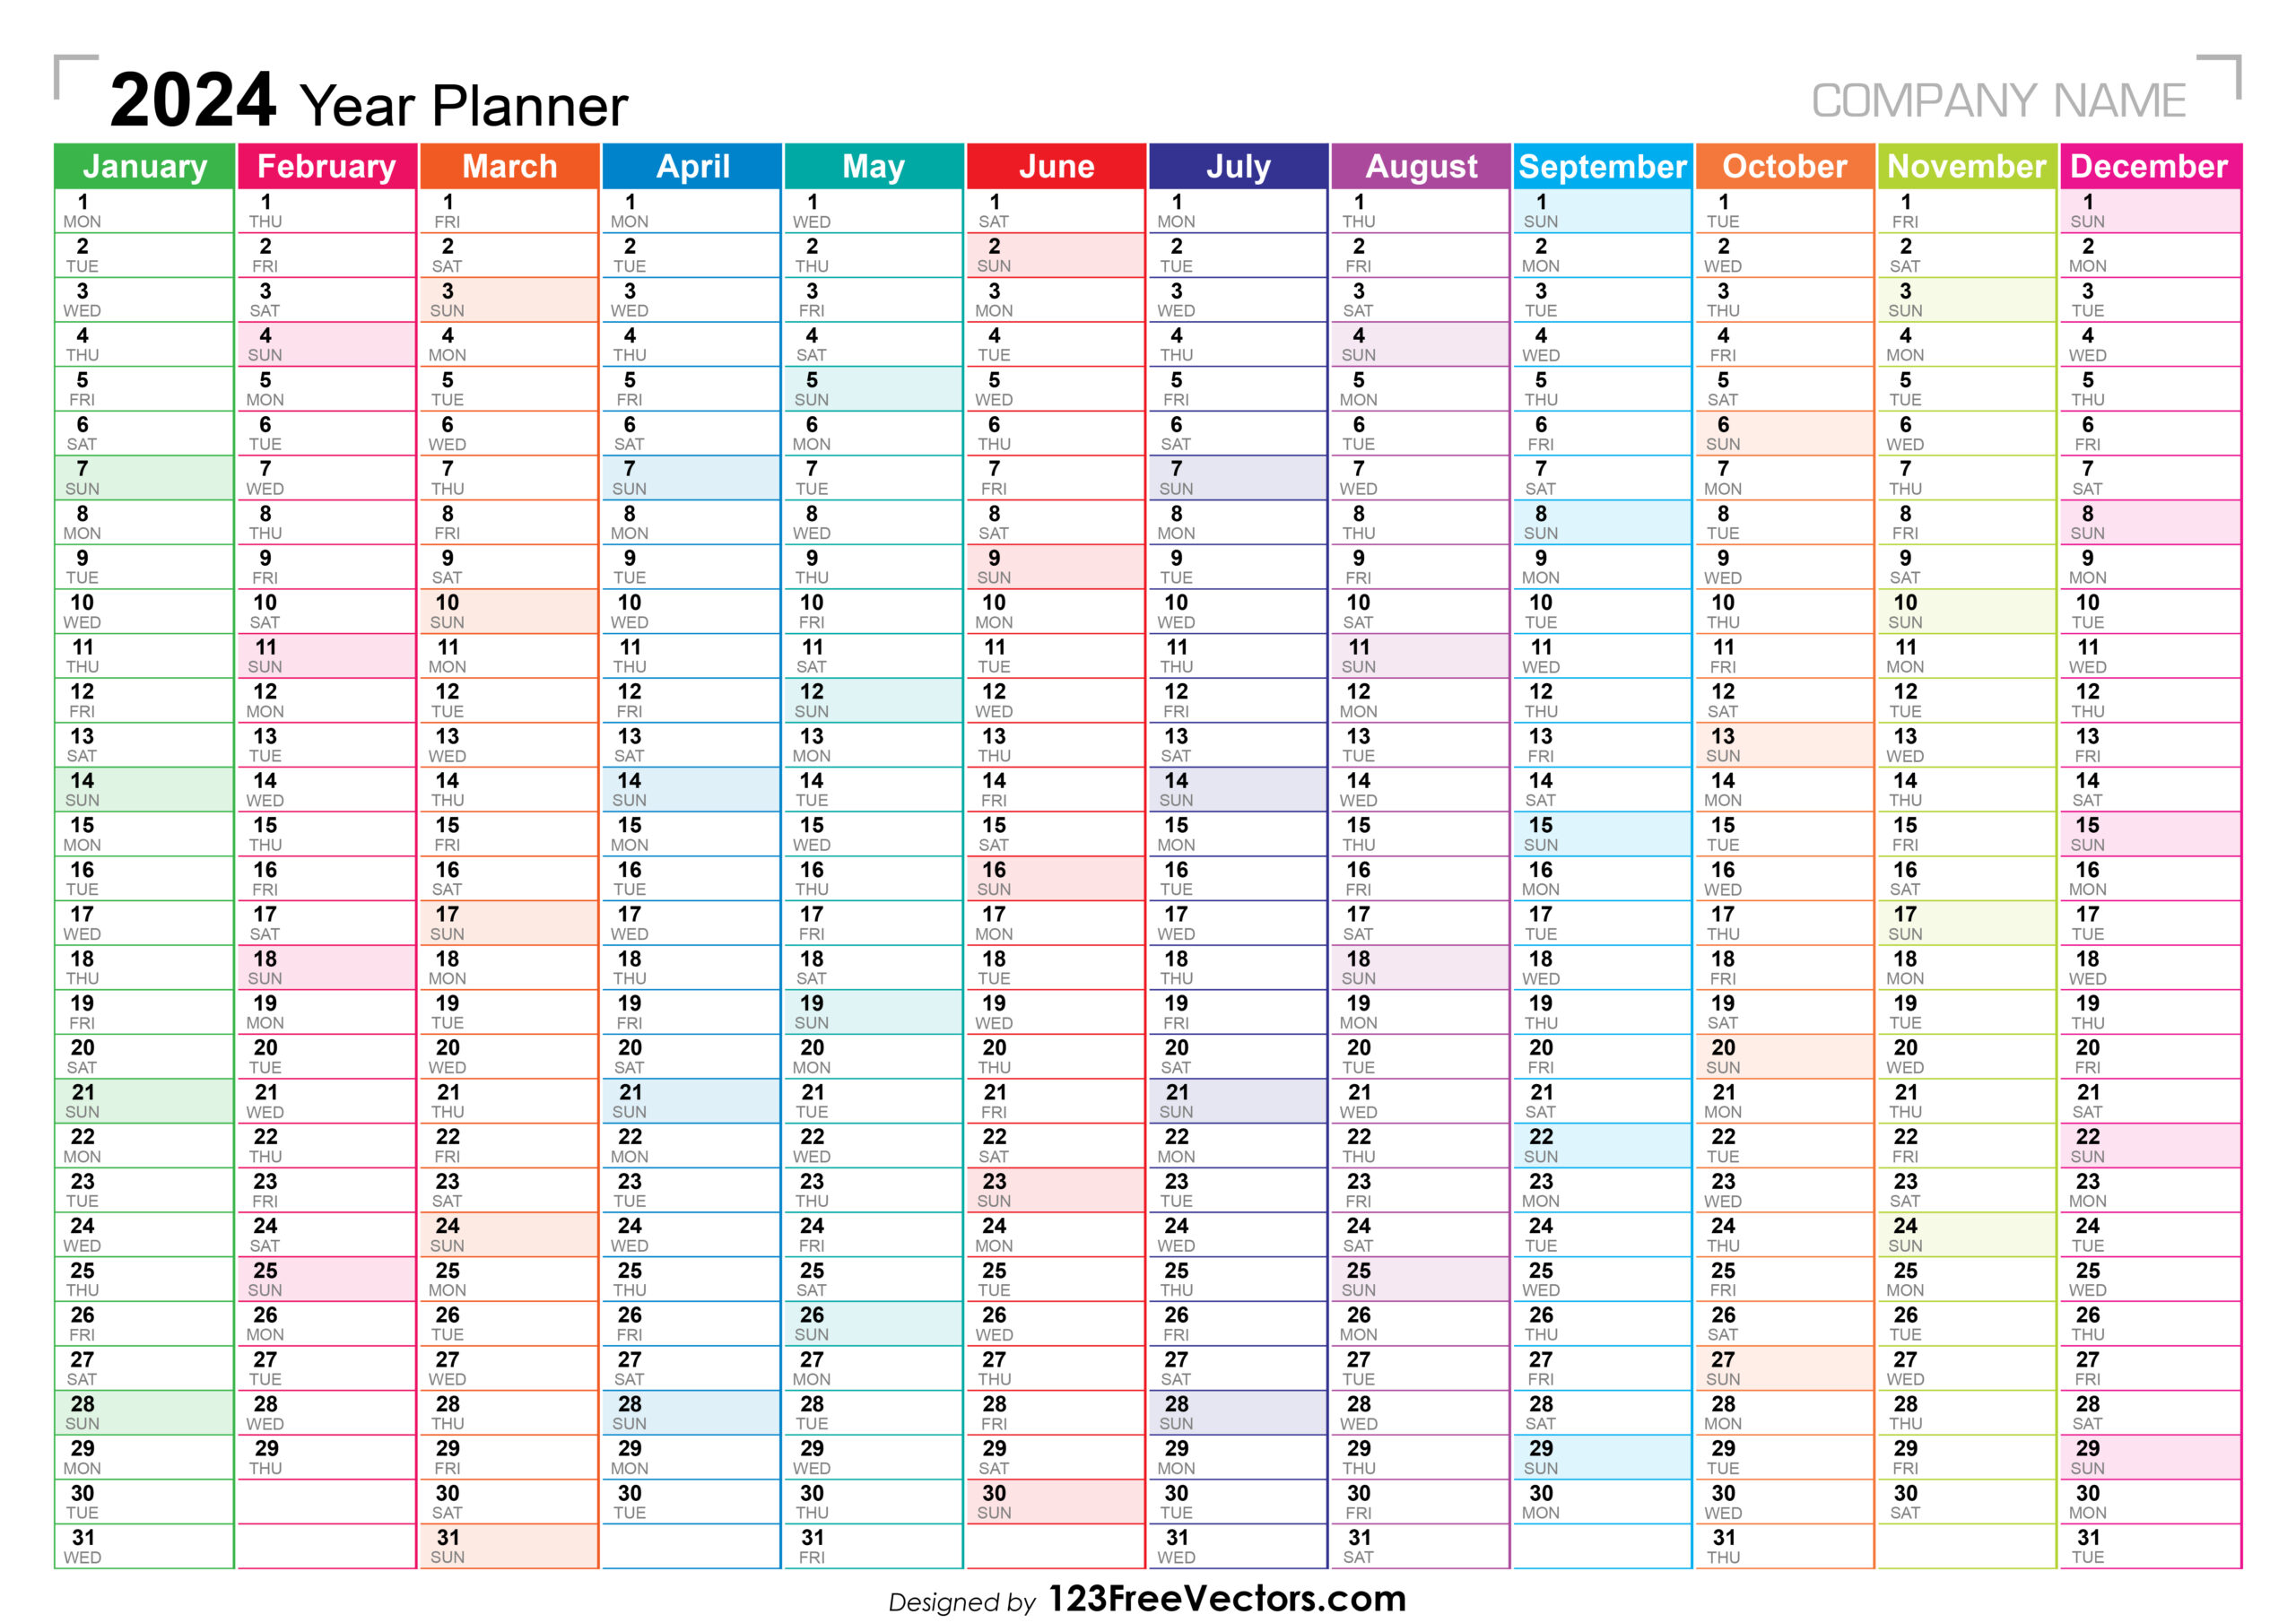 Free 2024 Year Planner | 2024 Annual Calendar Template